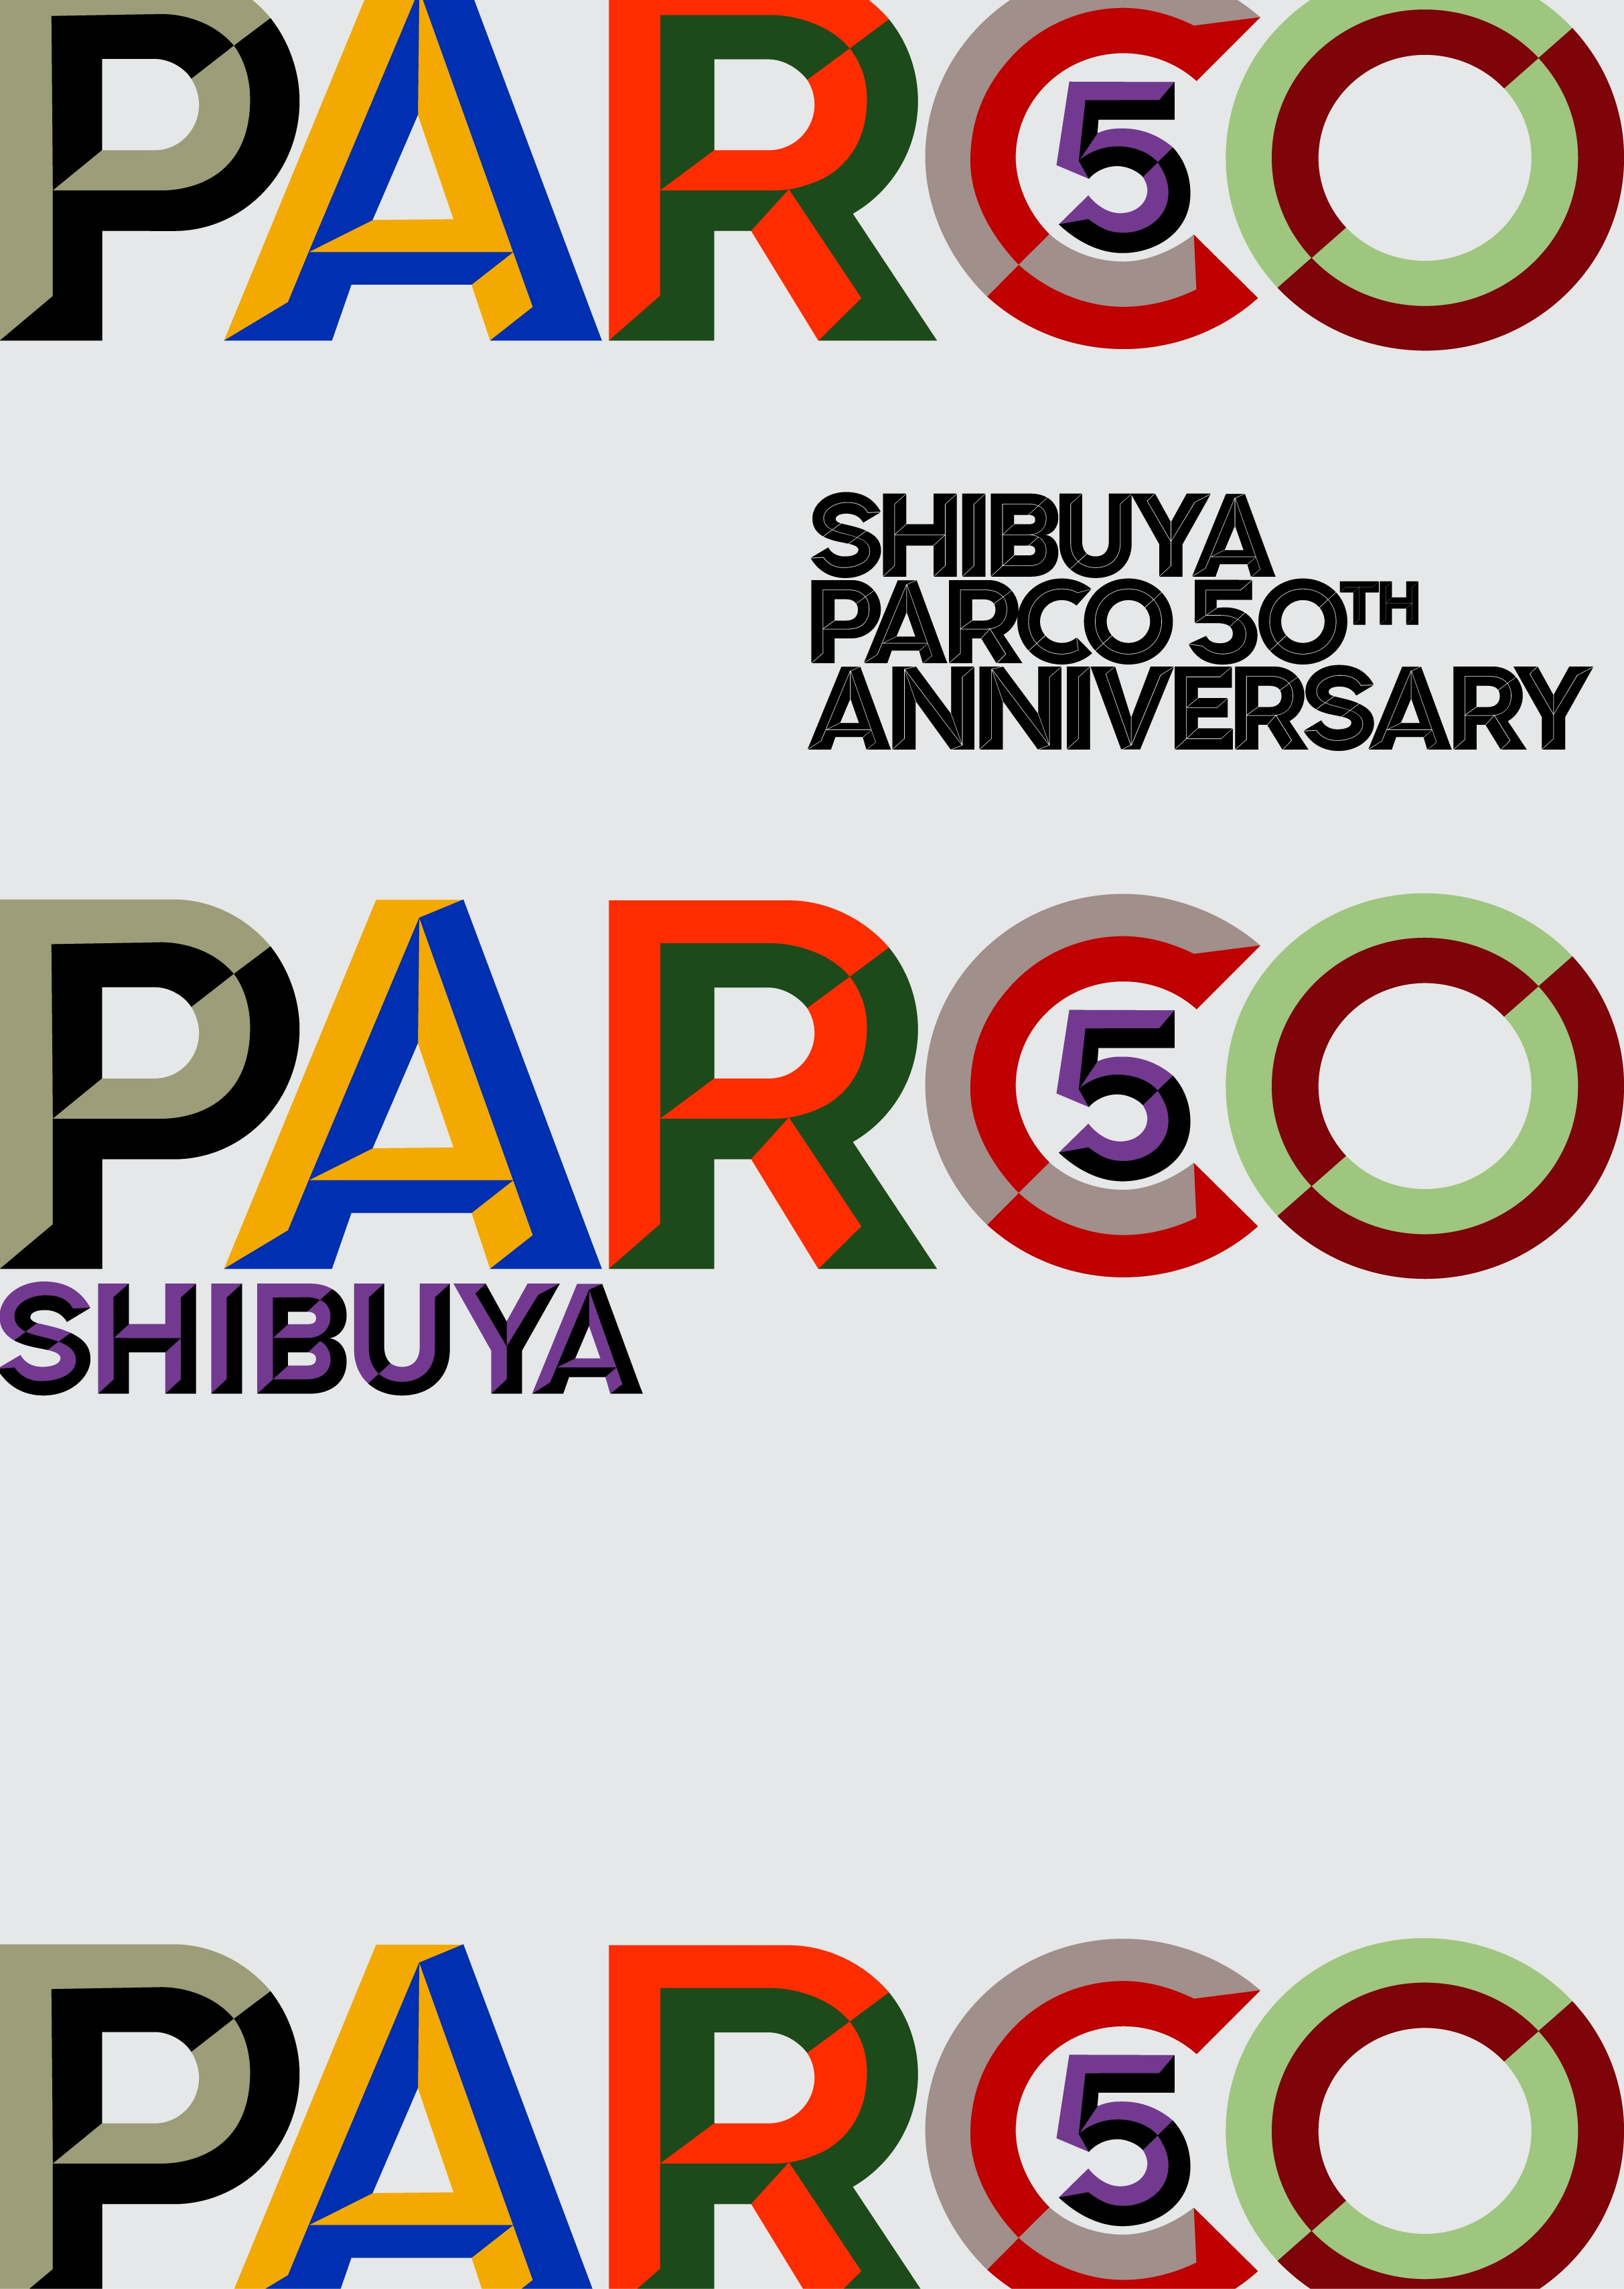 SHIBUYA PARCO 50TH ANNIVERSARY"50/50"|举行祝贺开业50周年的anibasariibento